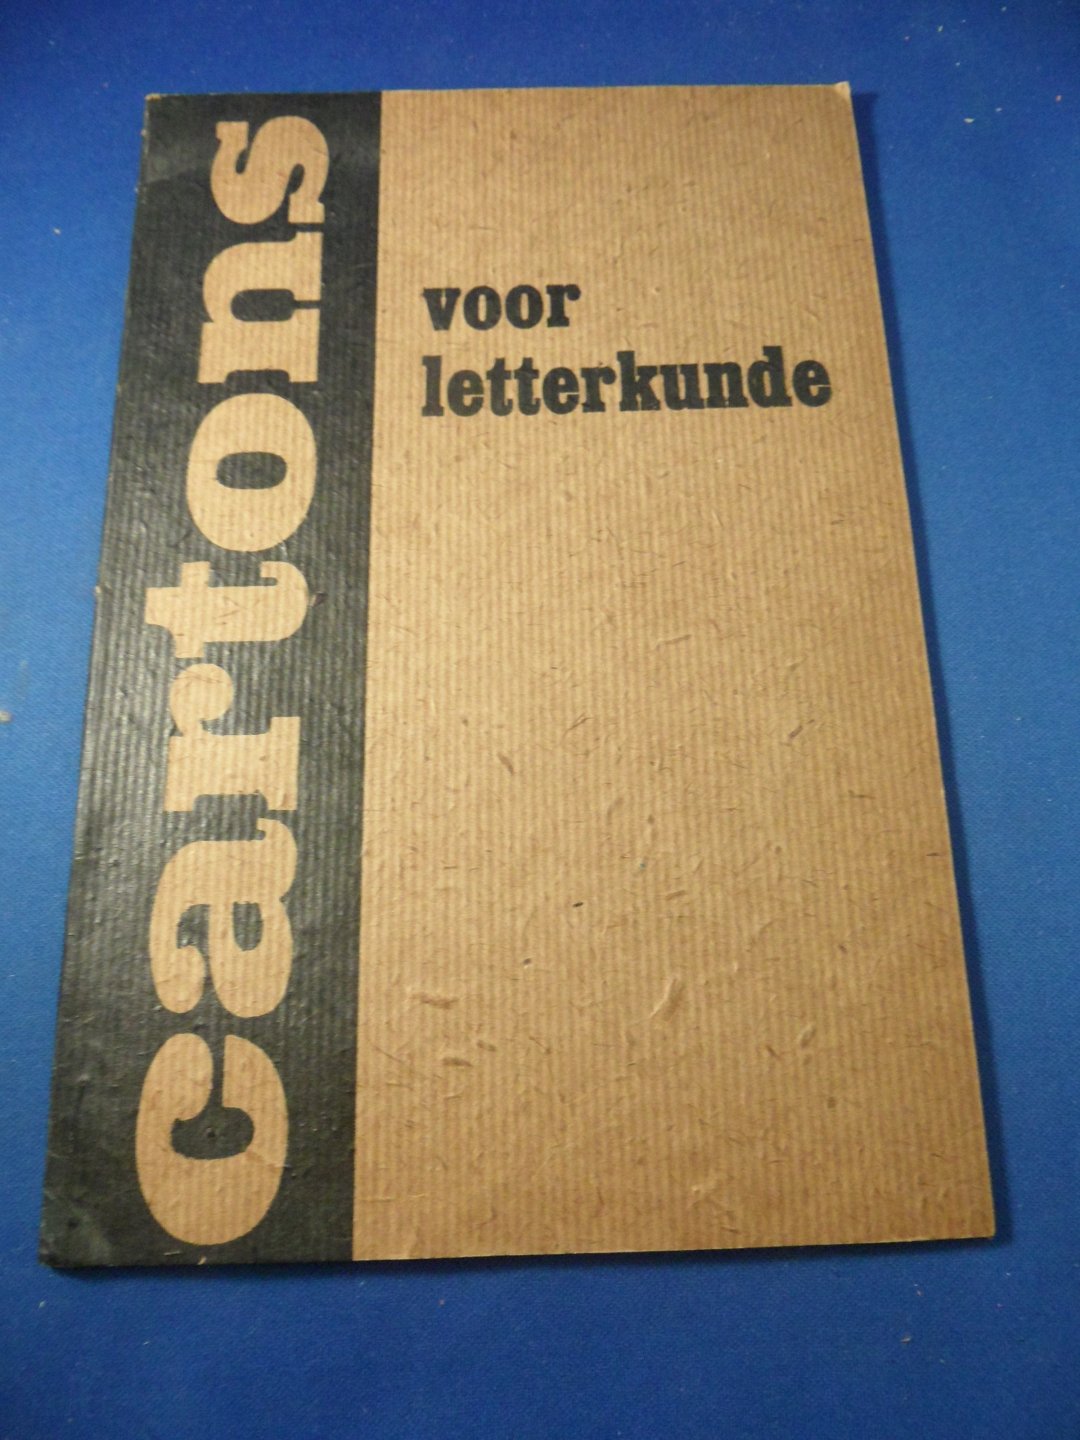 o.a K. Grazzel, A.van den Dodenacker, E,M. Janssen, F.L. Bastet, Roletto, S. - Cartons voor letterkunde. nr 5 -oktober 1959